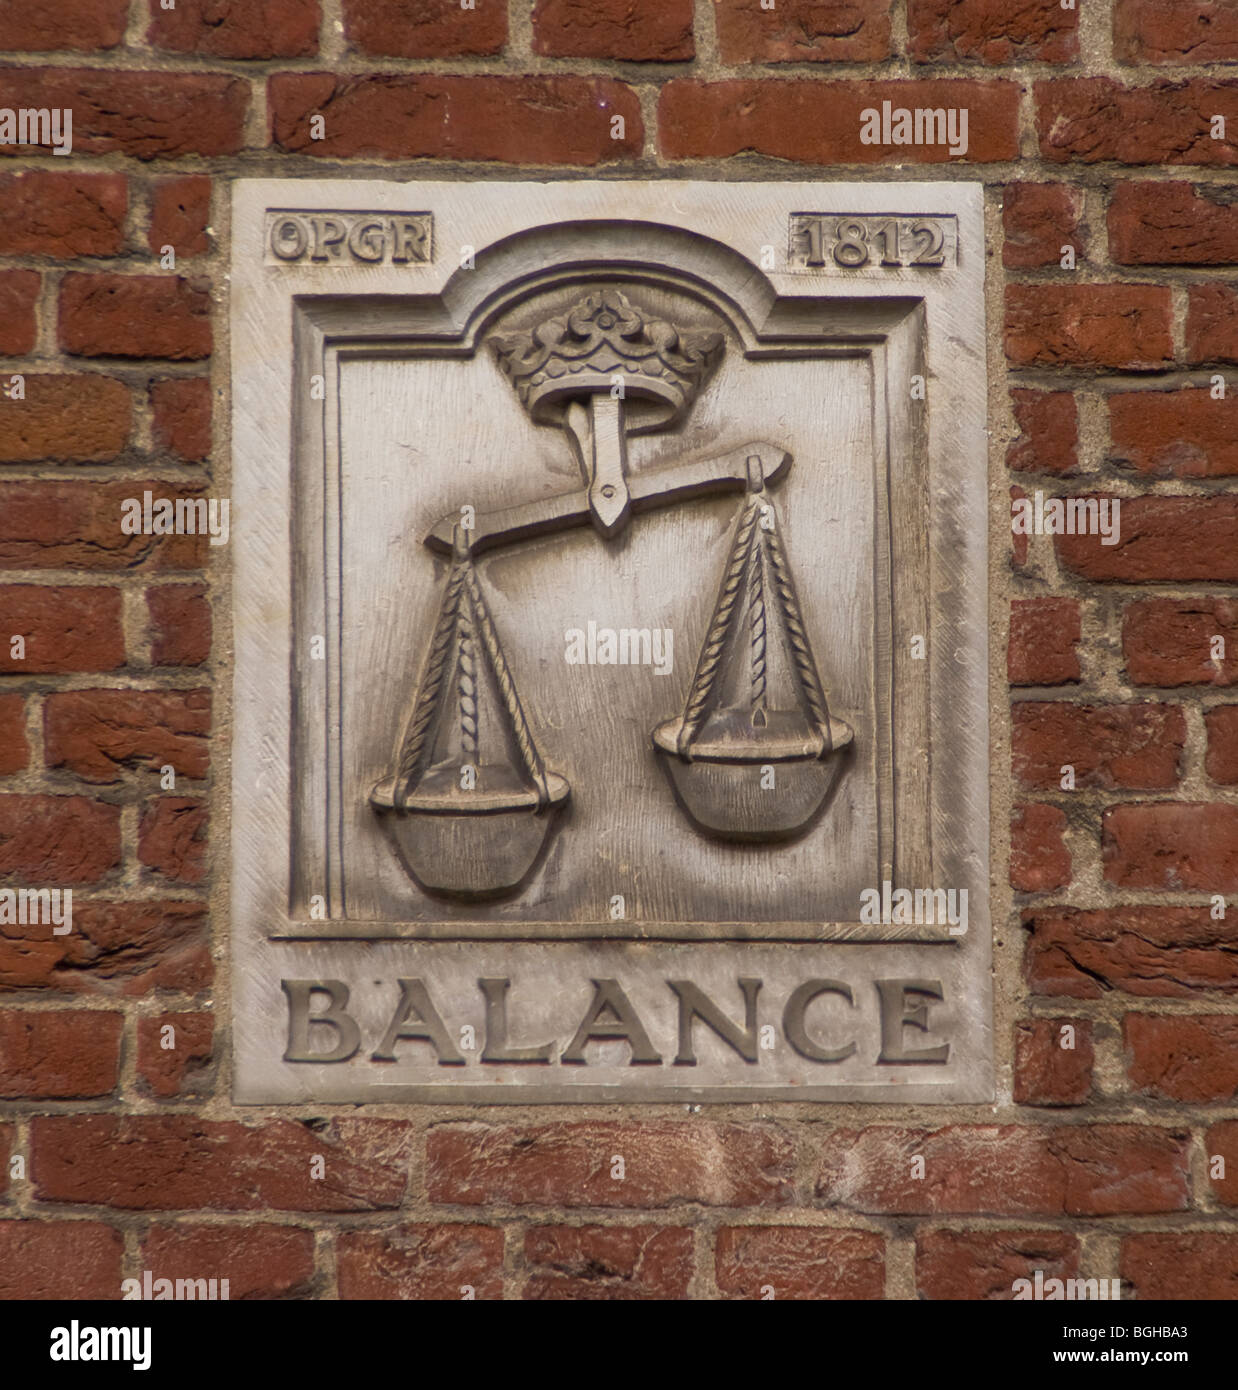 Balance mural on red brick wall Stock Photo